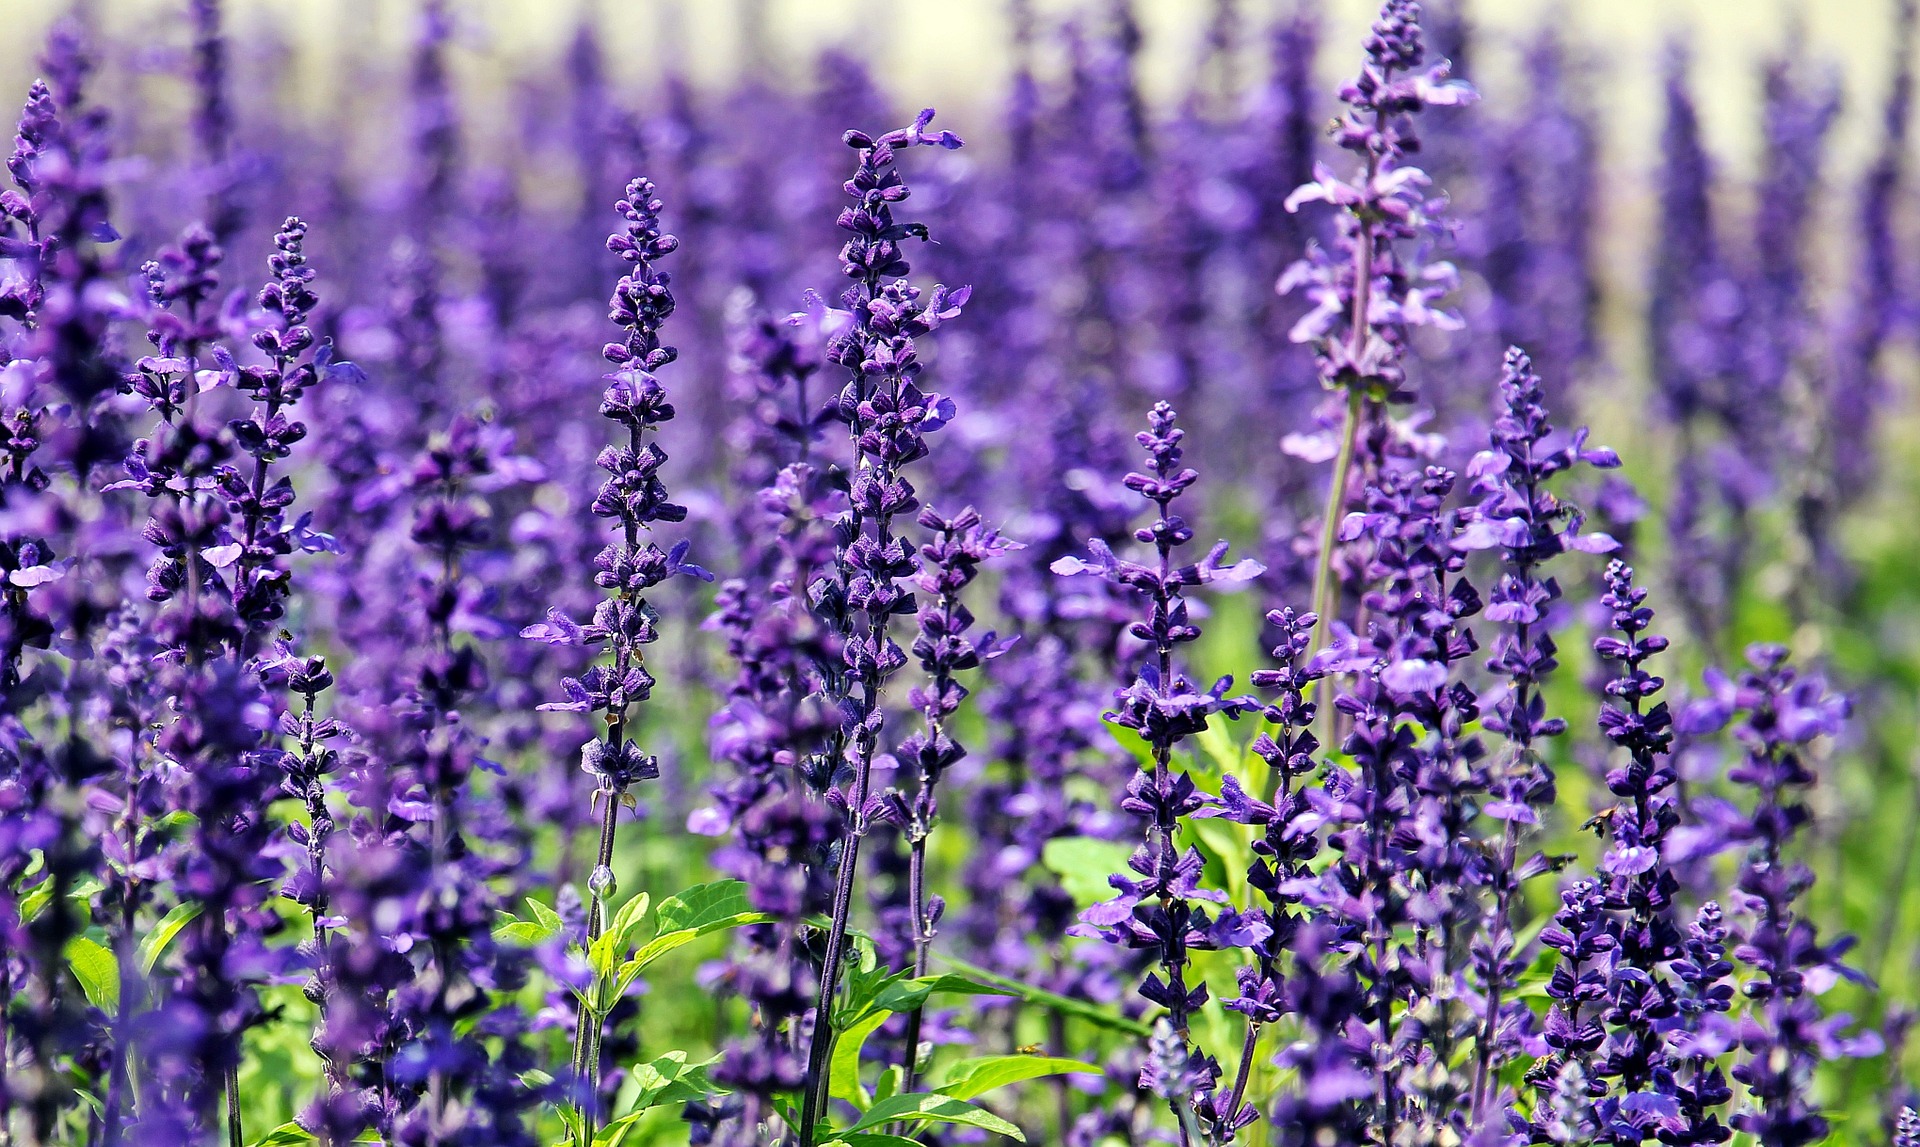 Lavendel (c) www.pixabay.com